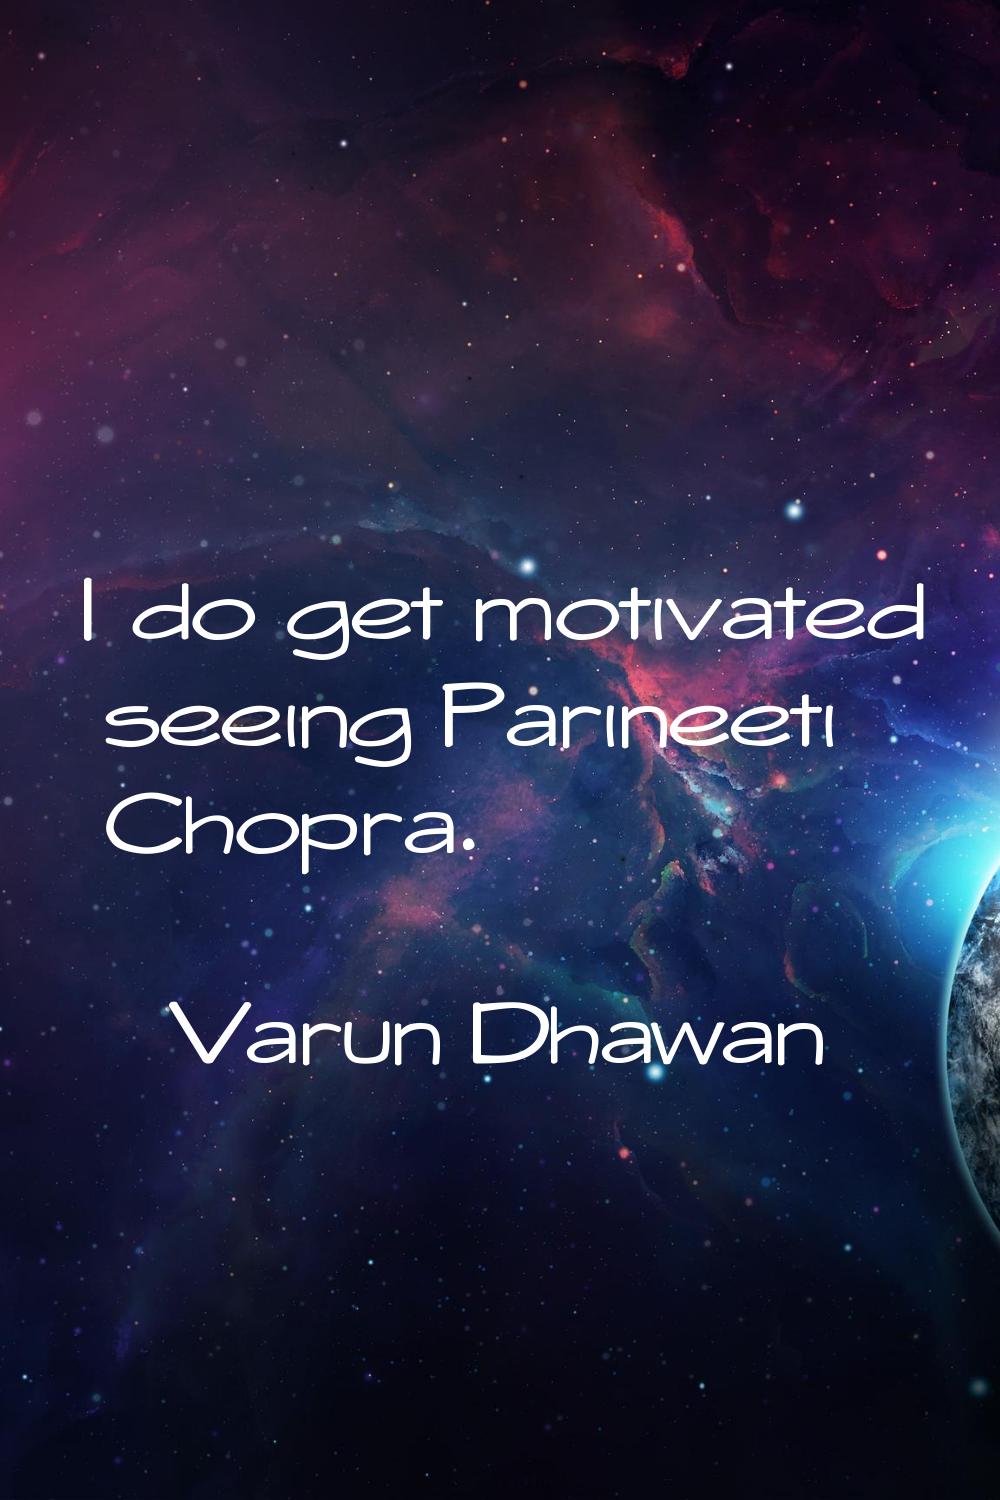 I do get motivated seeing Parineeti Chopra.